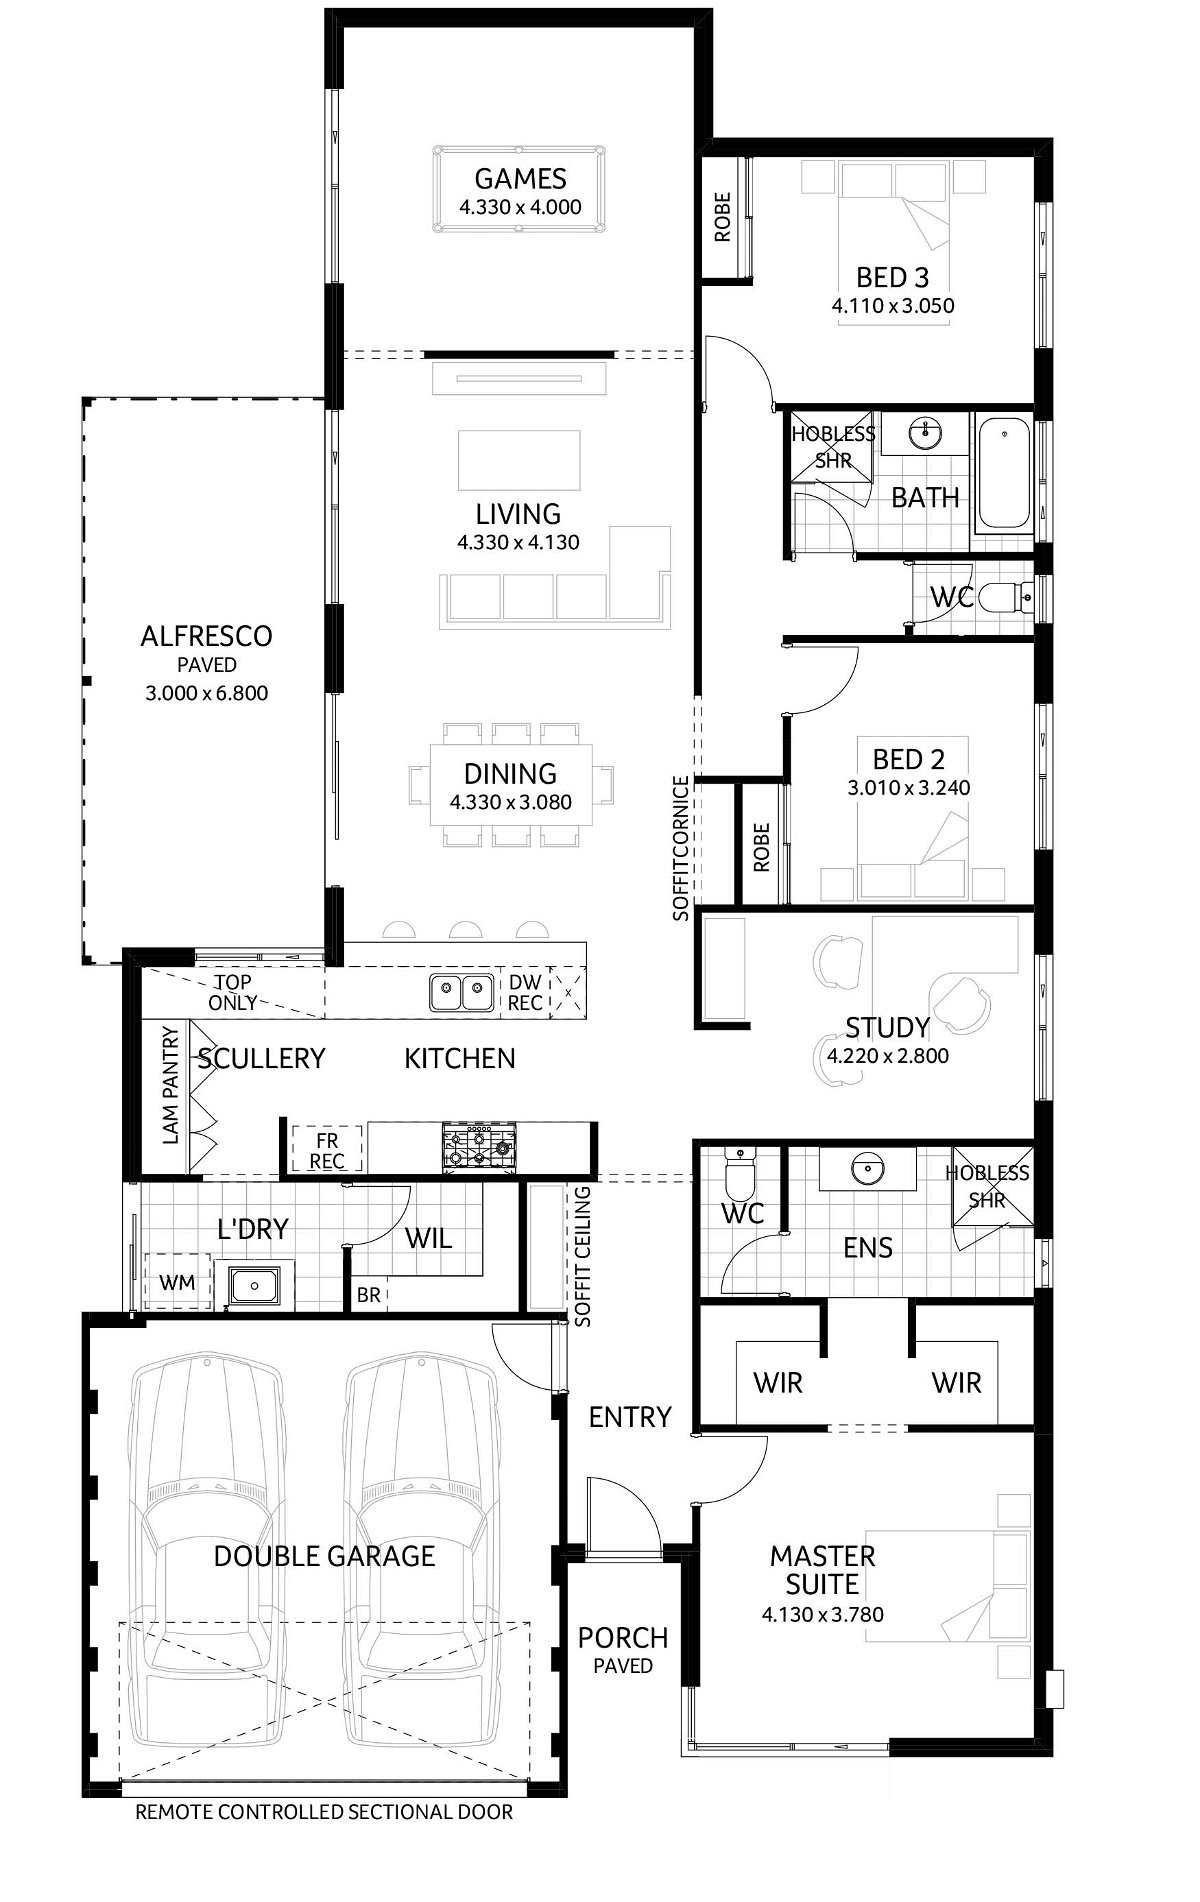 Plunkett Homes - Malibu | Lifestyle - Floorplan - Malibu Lifestyle Marketing Planjpg